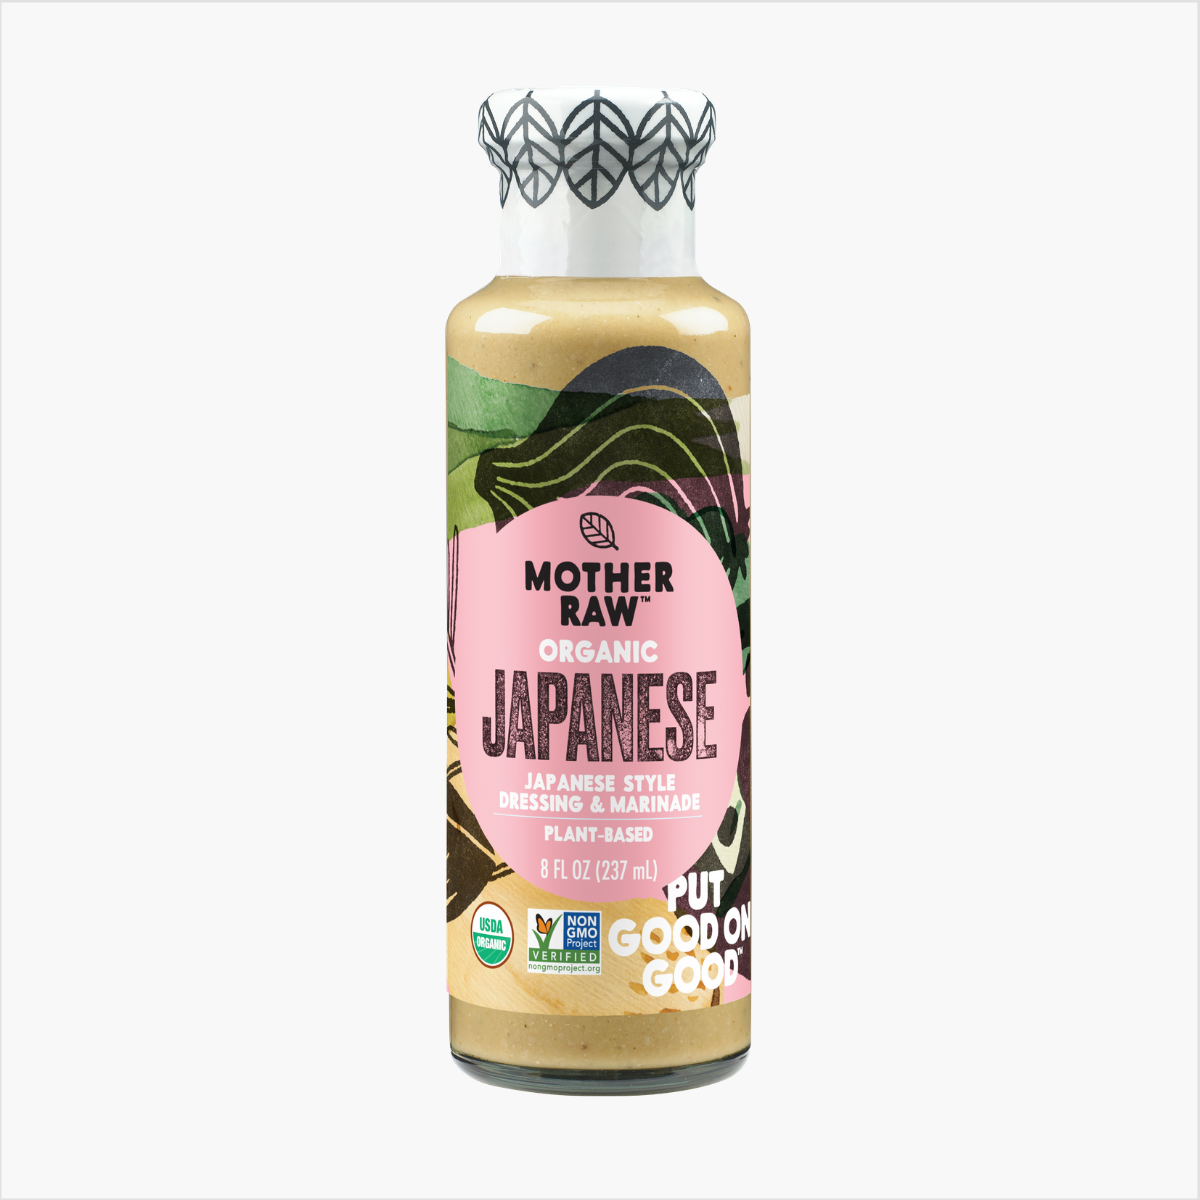 Organic, Vegan Japanese Dressing and Marinade